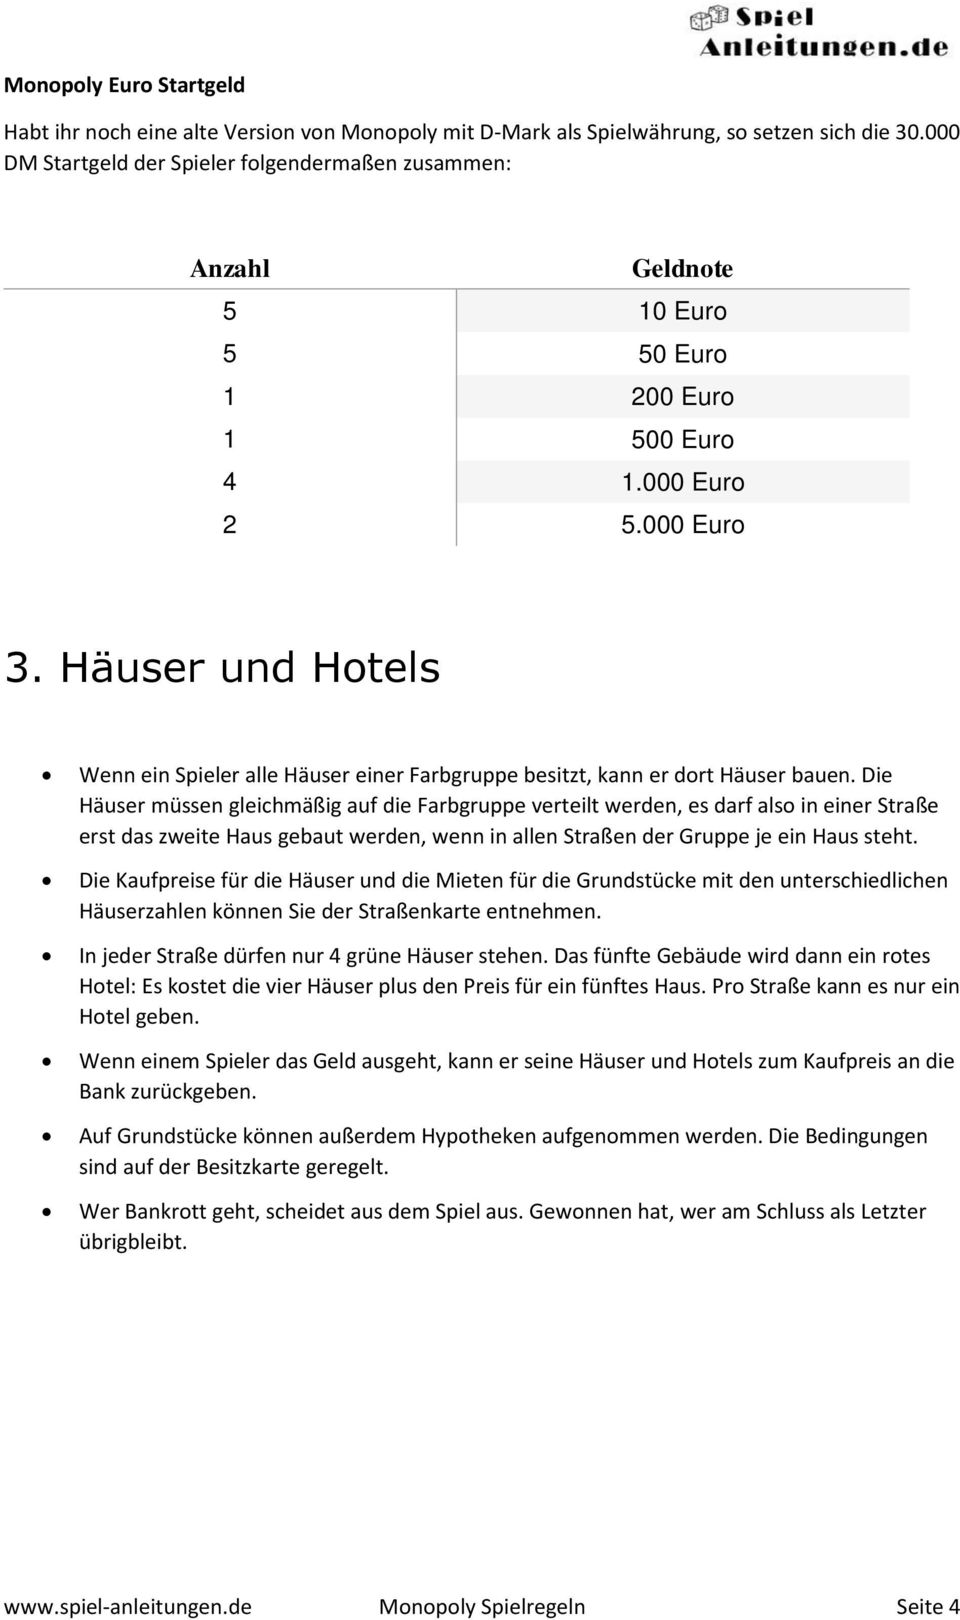 Deutsch anleitung banking monopoly pdf ultra monopoly banking